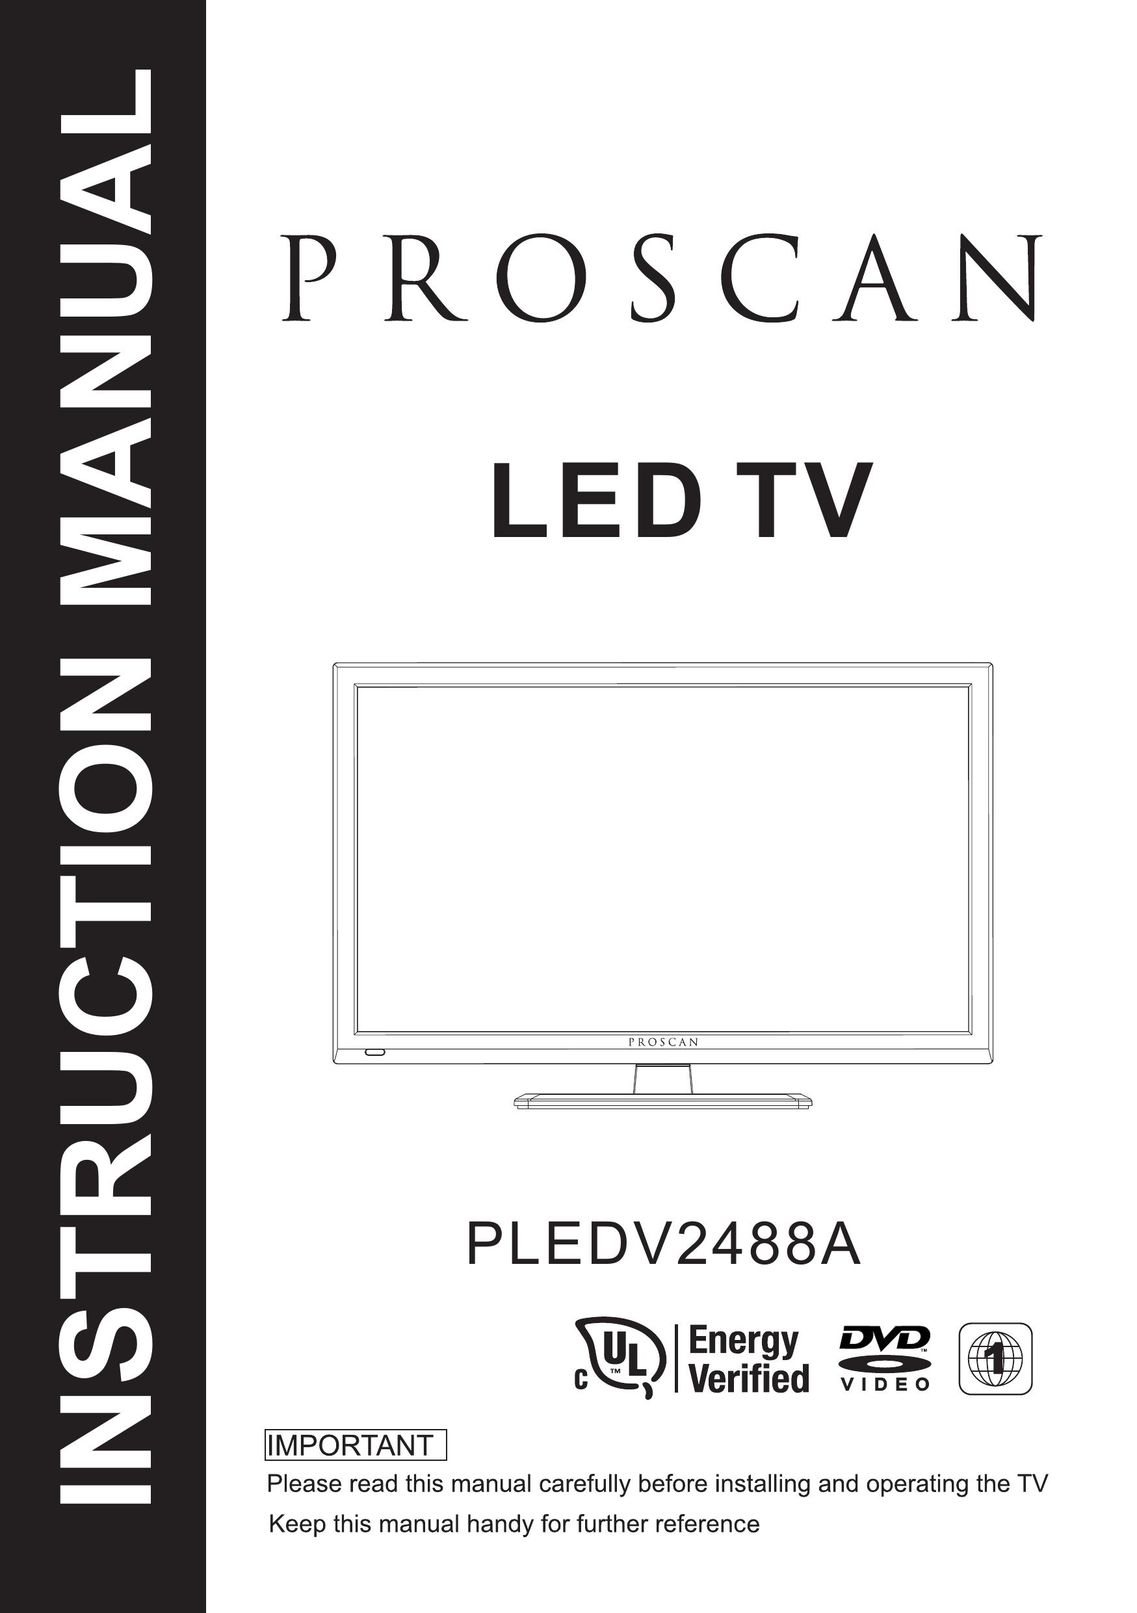 ProScan PLEDV2488A Flat Panel Television User Manual